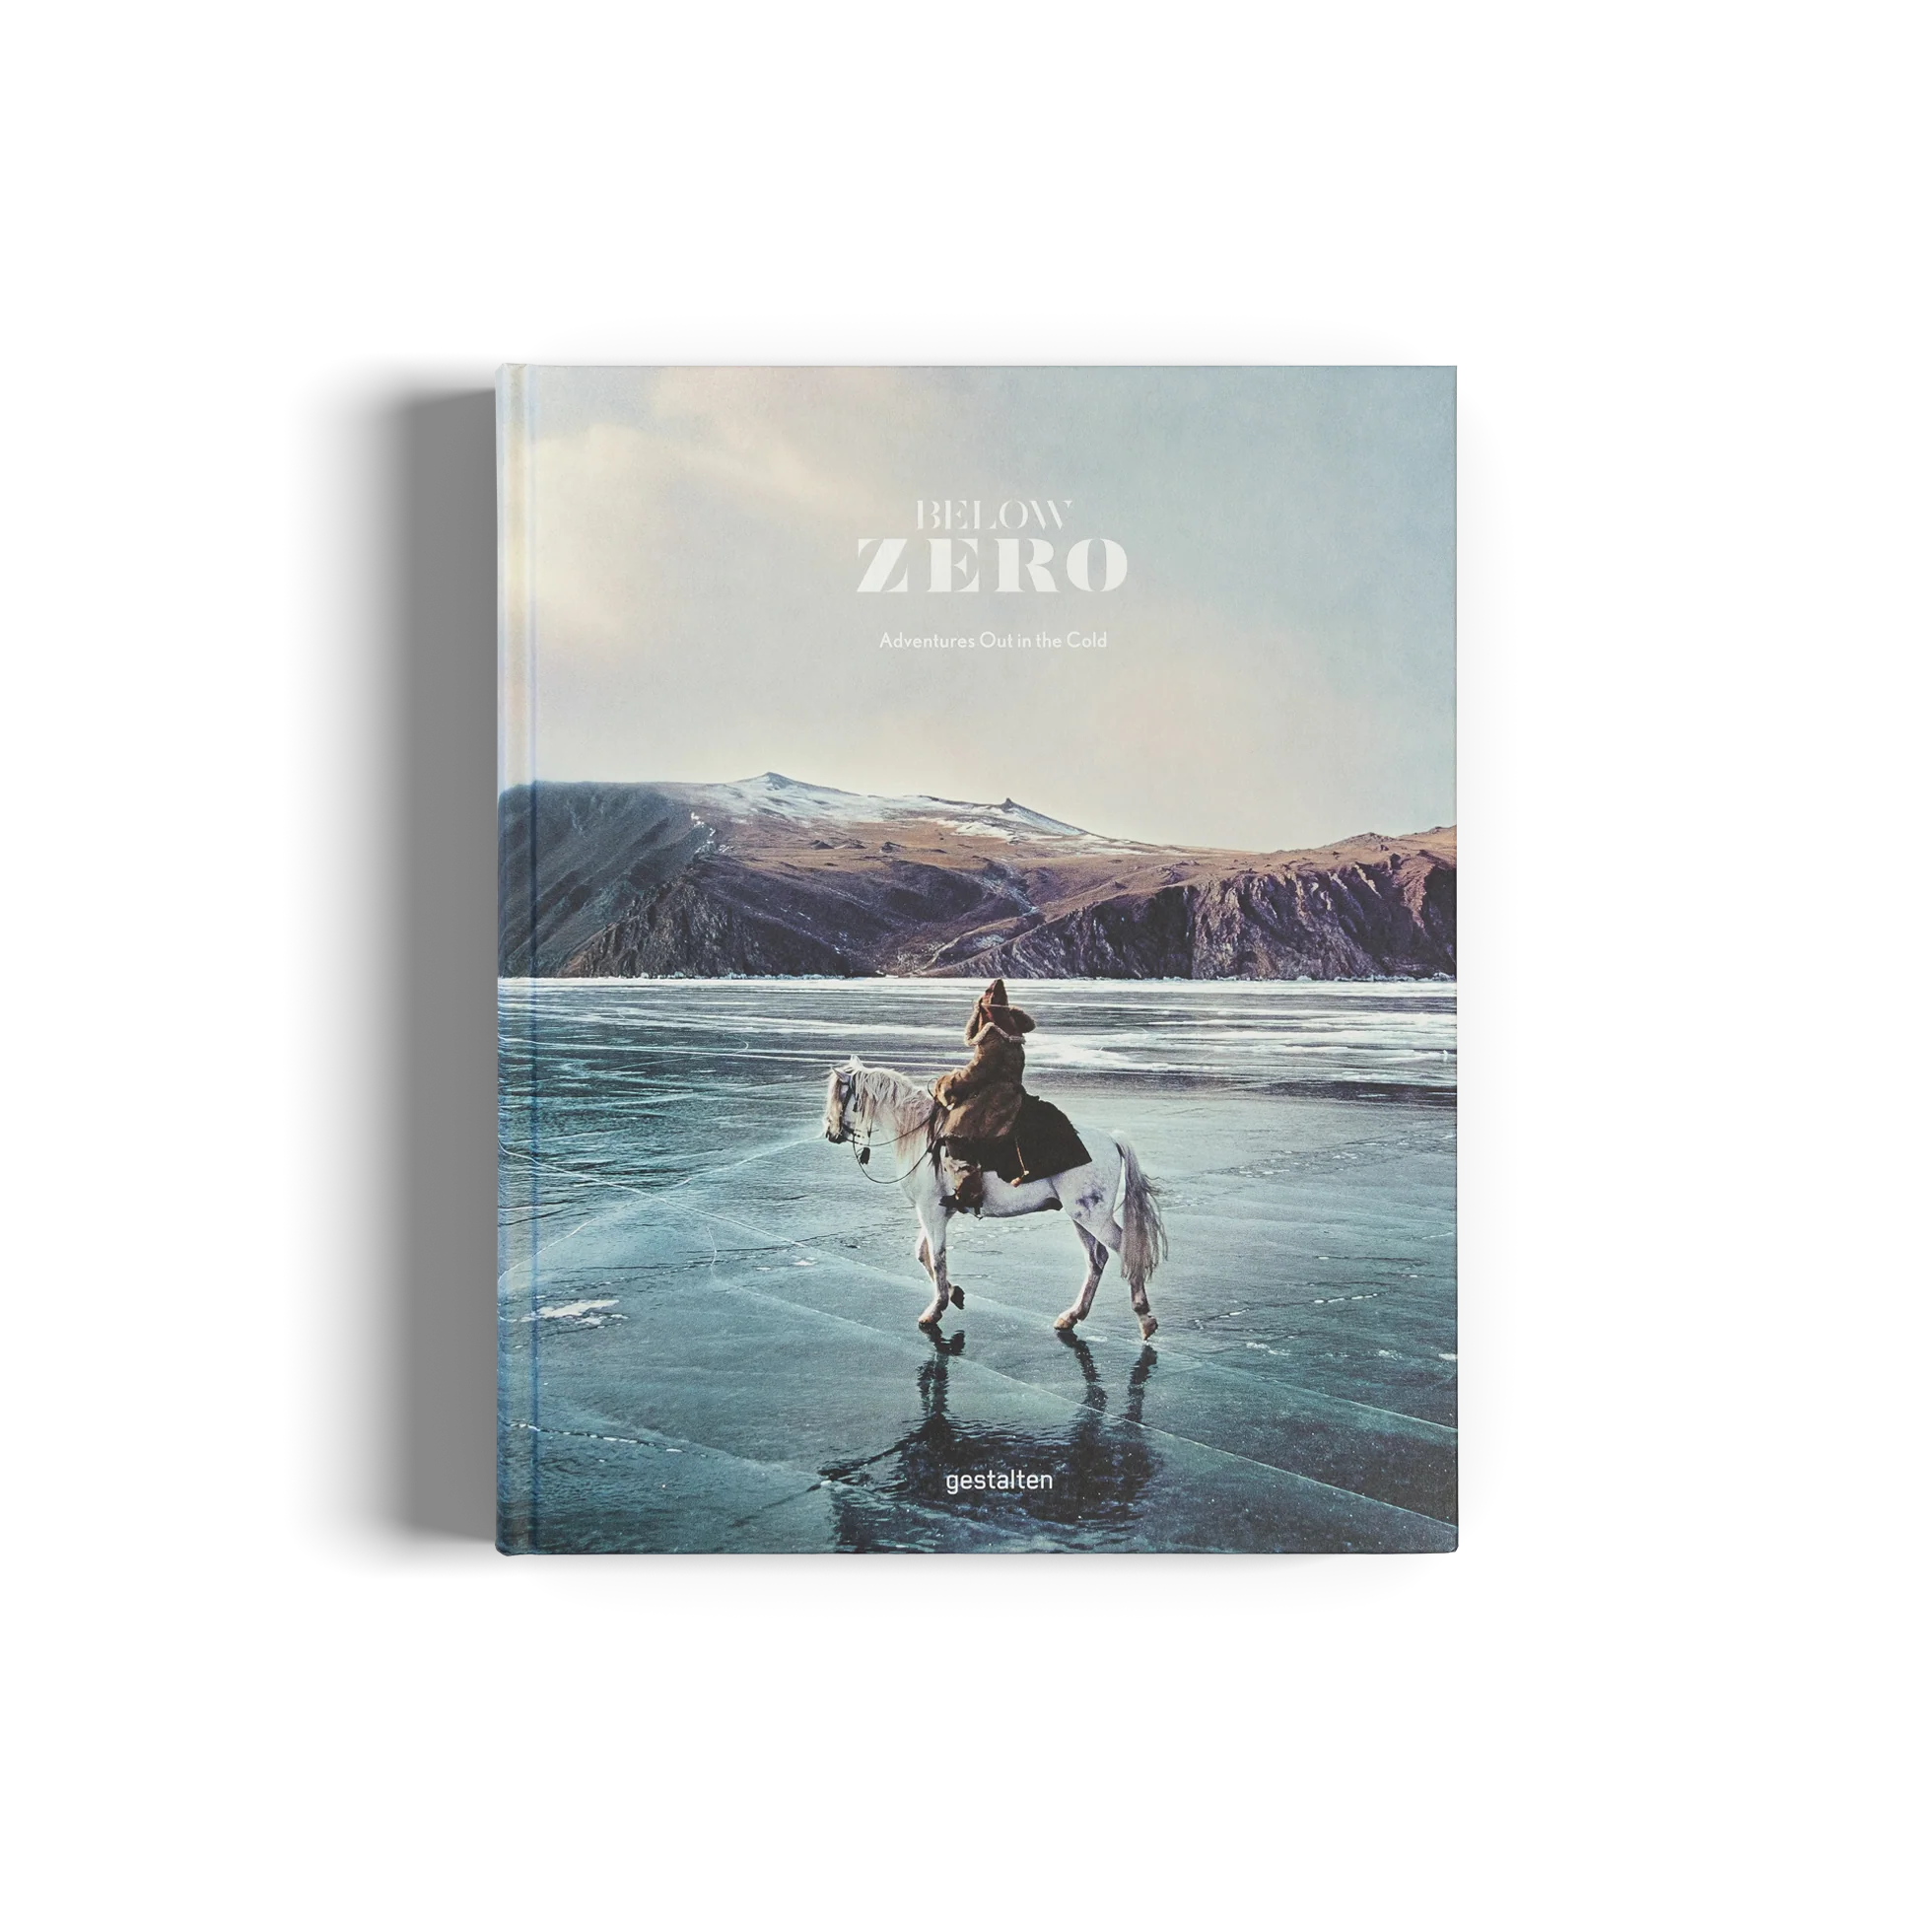 Album Below zero